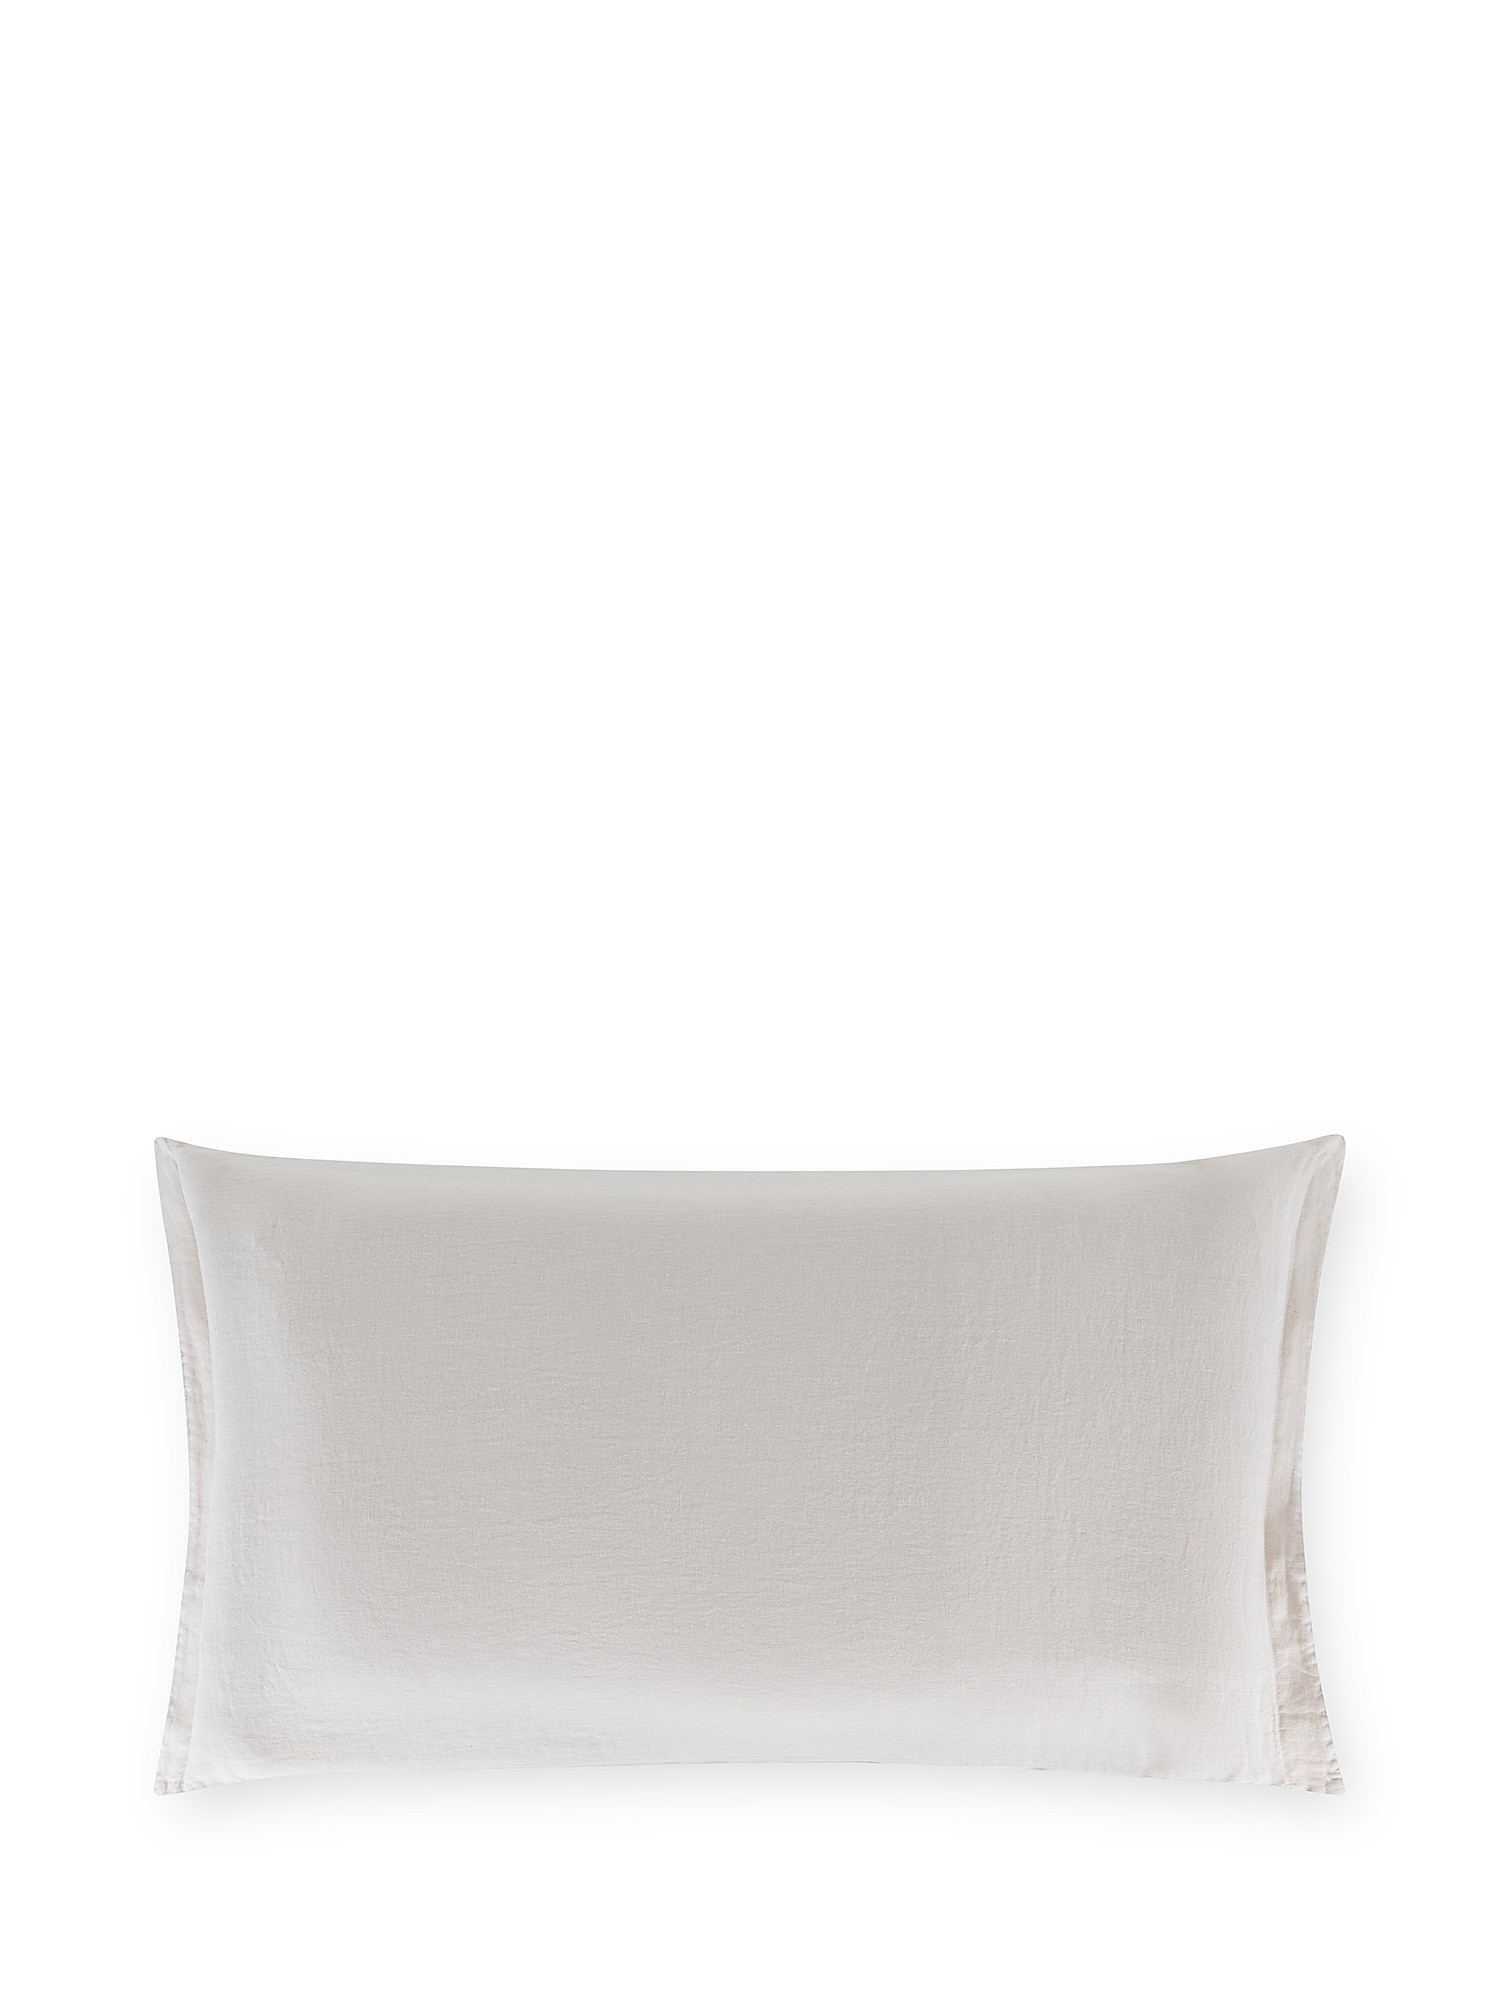 Zefiro plain color linen and cotton pillowcase, Light Beige, large image number 0